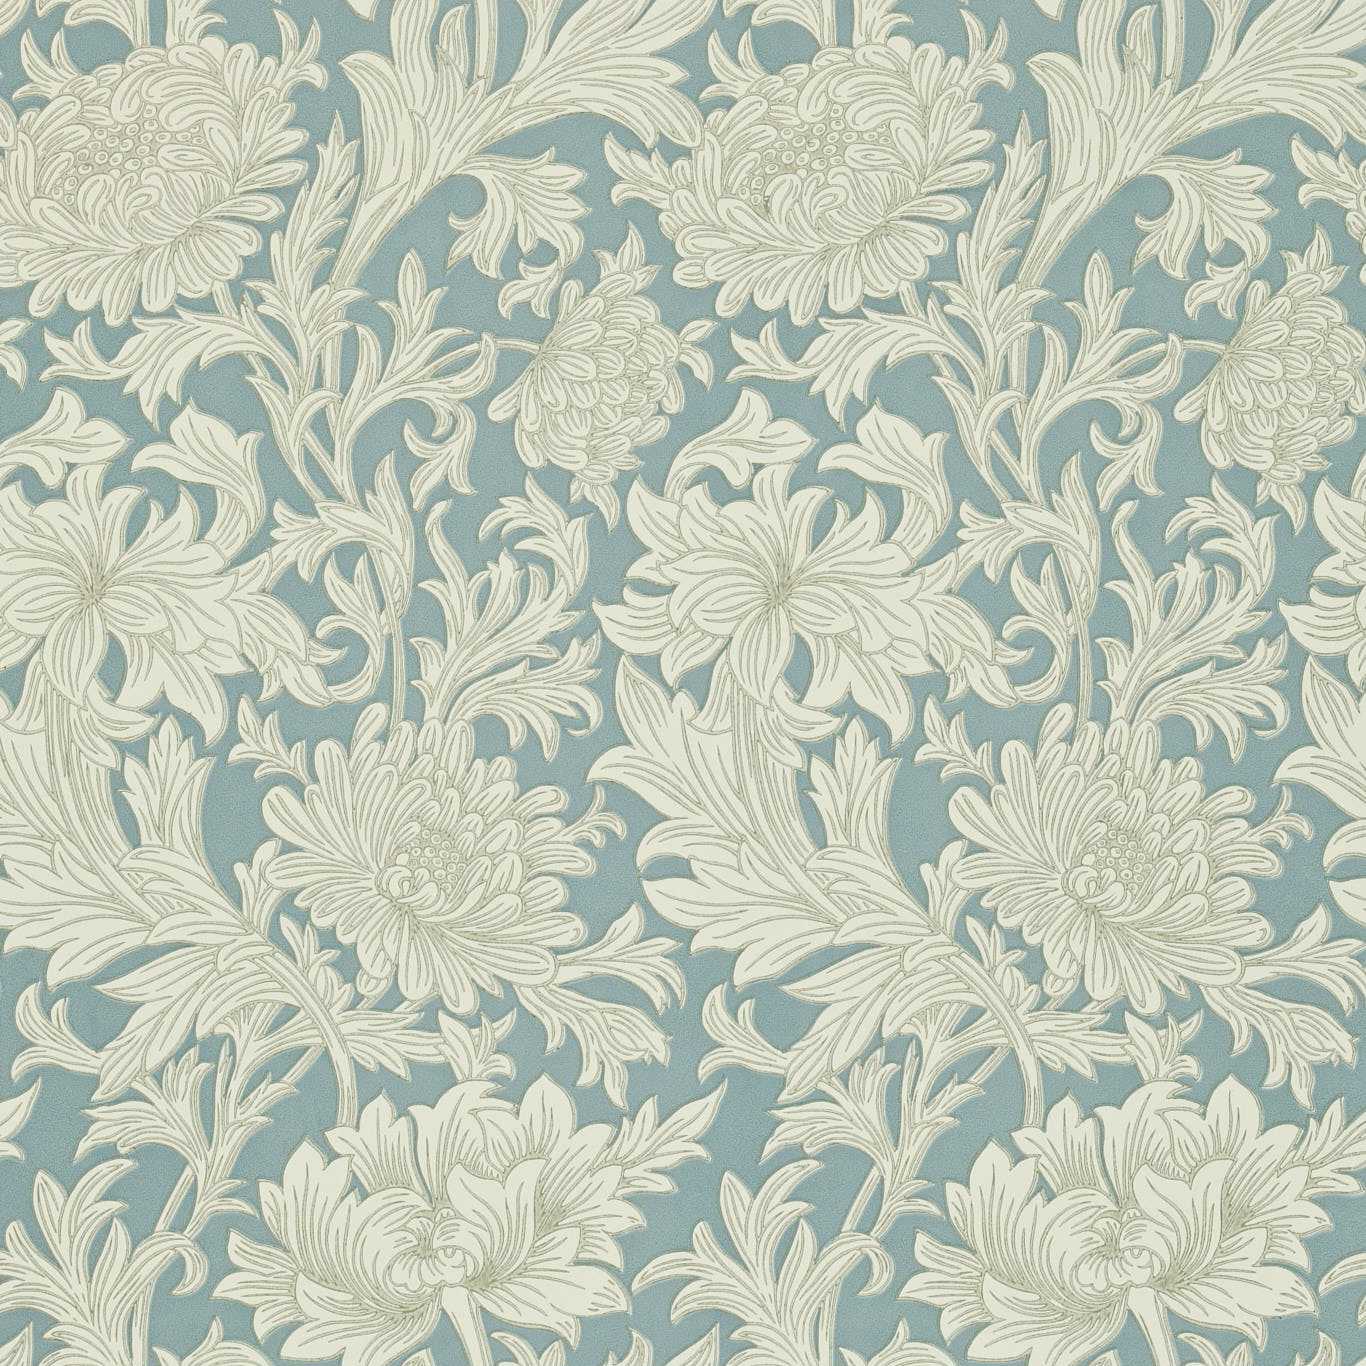 Chrysanthemum Toile China Blue/Cream Wallpaper DMCW210415 by Morris & Co